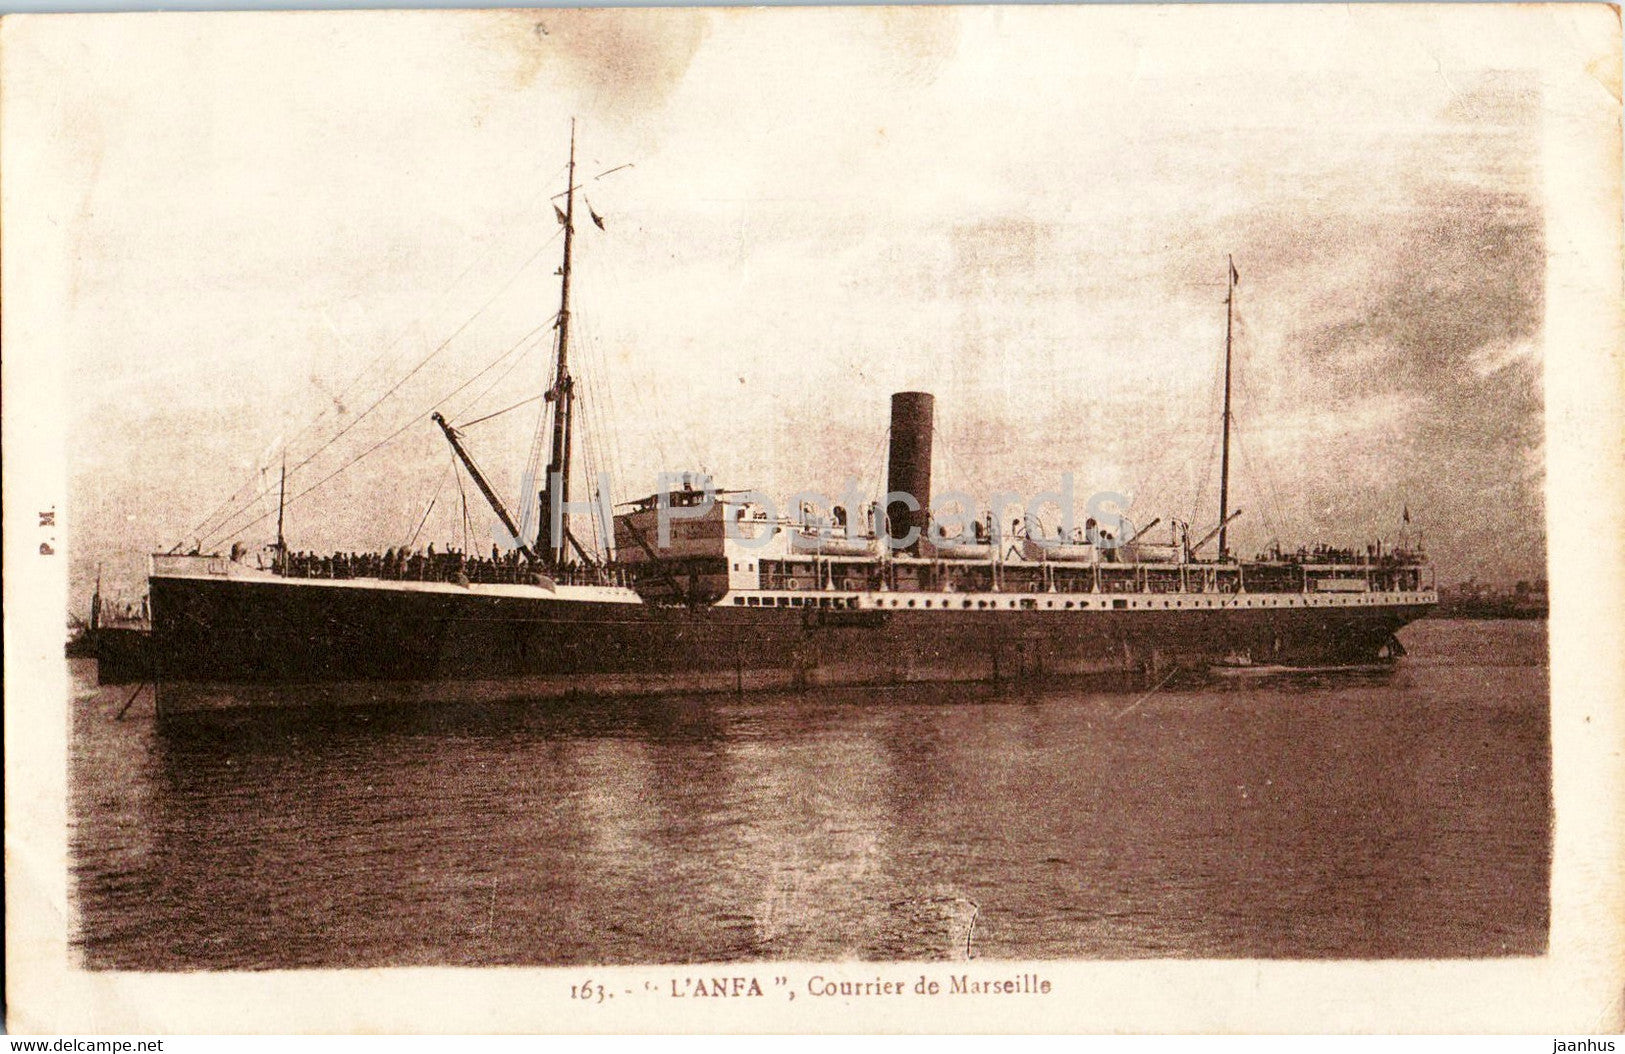 L'Anfa - Courrier de Marseille - ship - steamer - 163 - old postcard - 1927 - France - used - JH Postcards